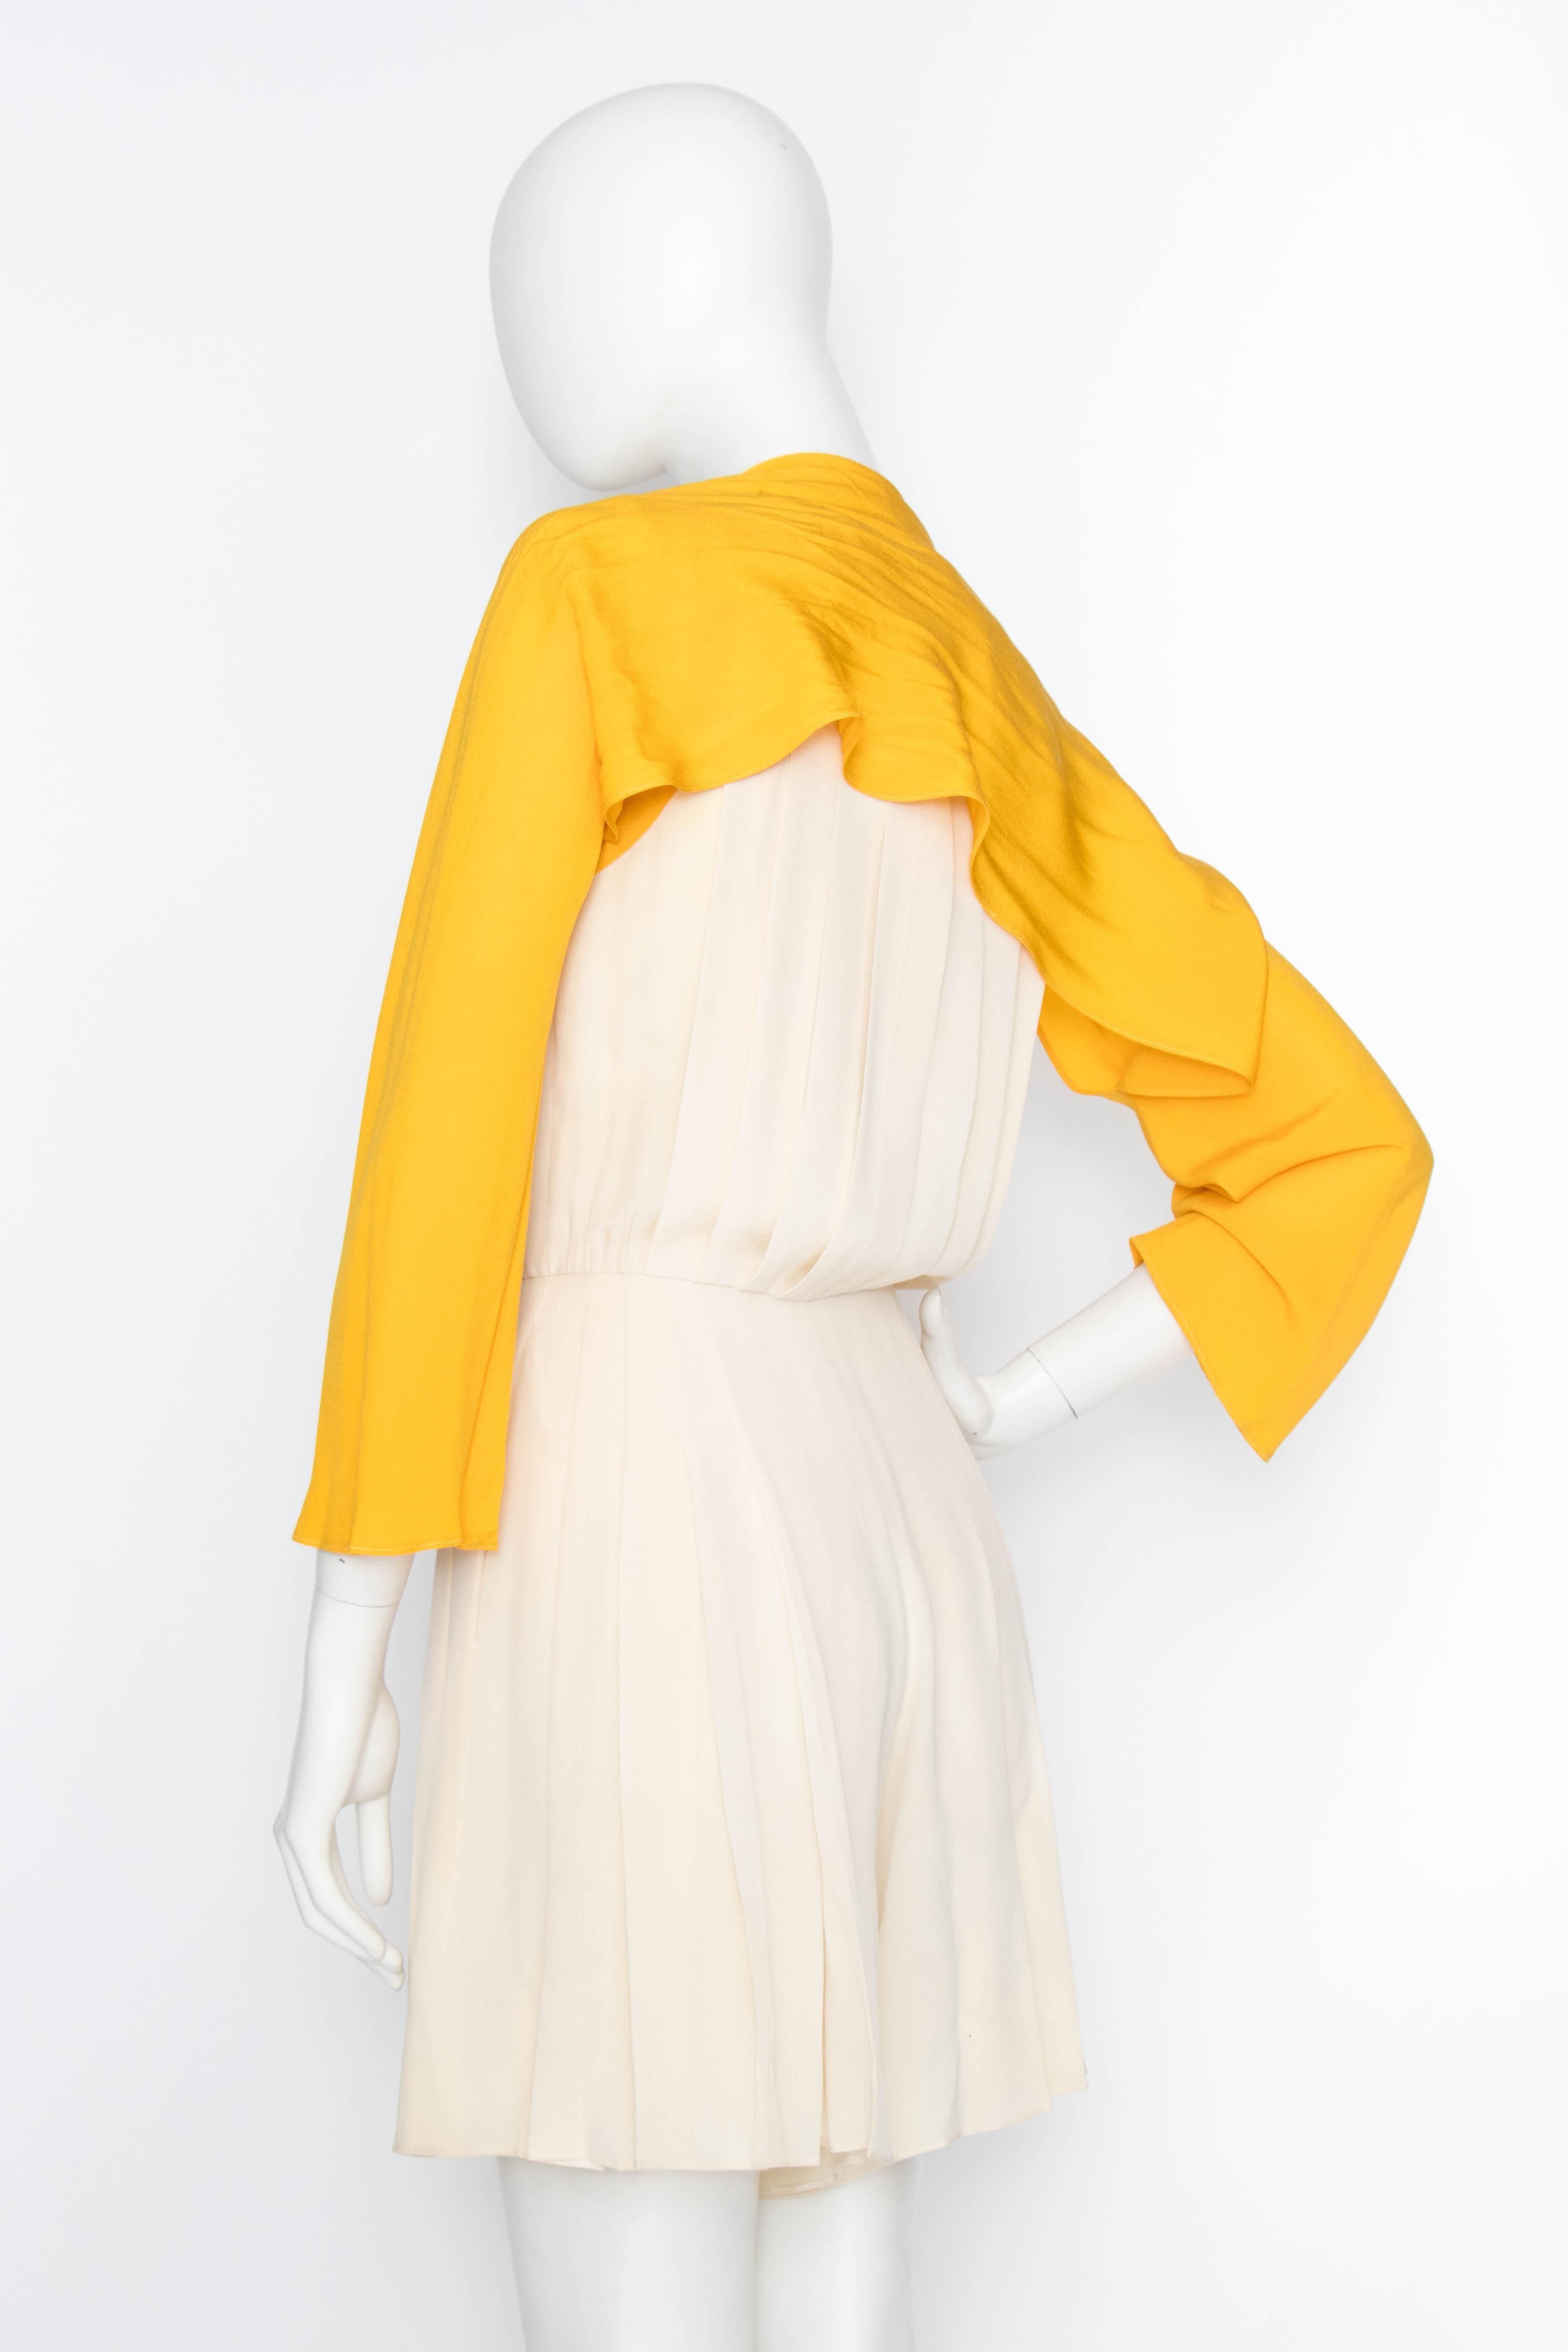 Women's or Men's A 1980s Chanel Creme Silk Playsuit and Yellow Bolero Ensemble